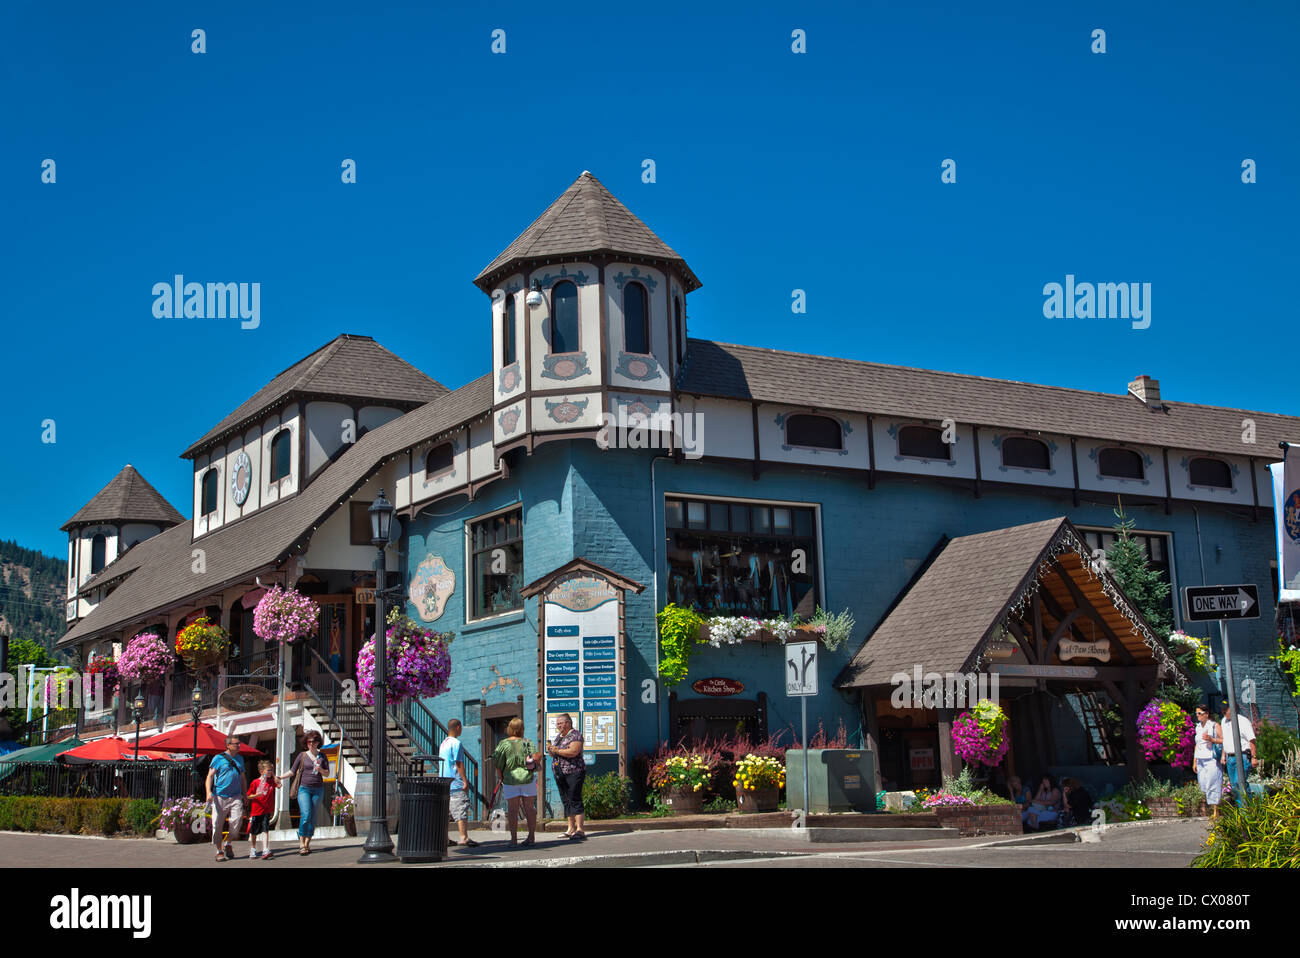 General view of Bavarian architecture in Leavenworth, Washington, USA. Stock Photo